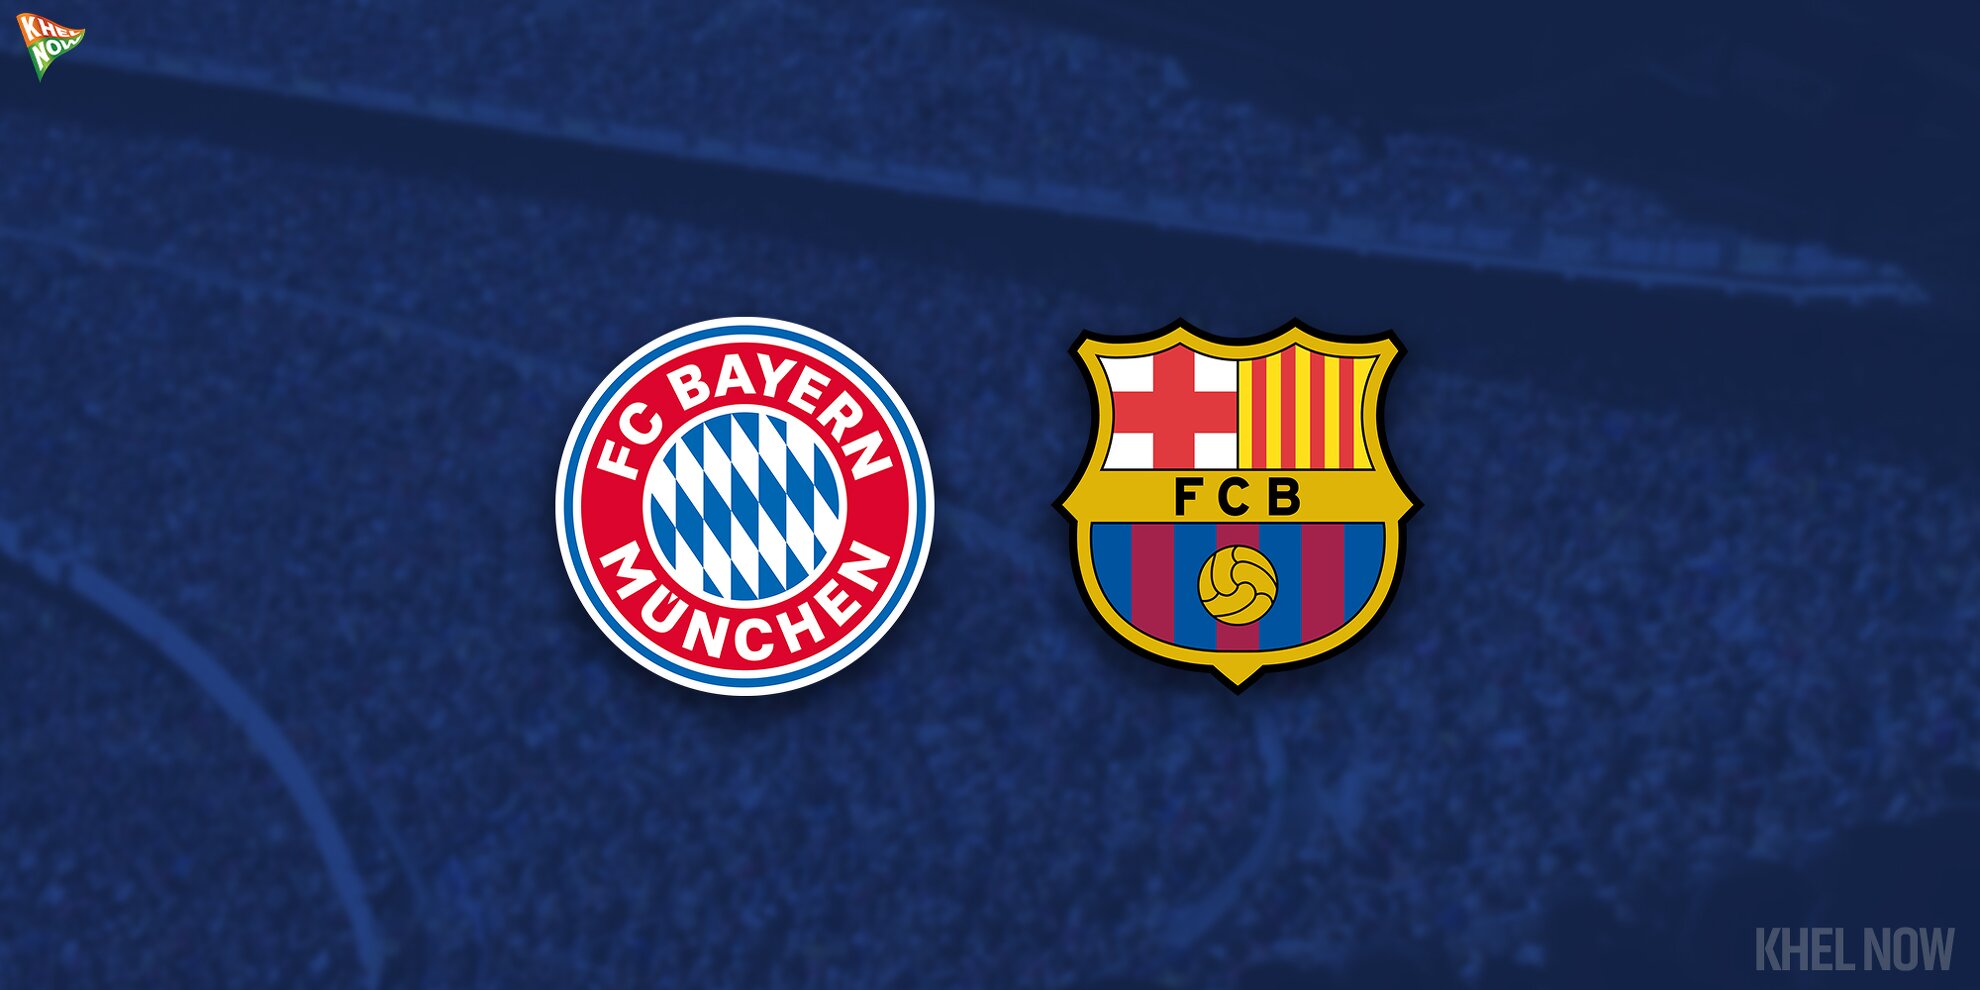 Bayern Munich vs FC Barcelona: head-to-head record